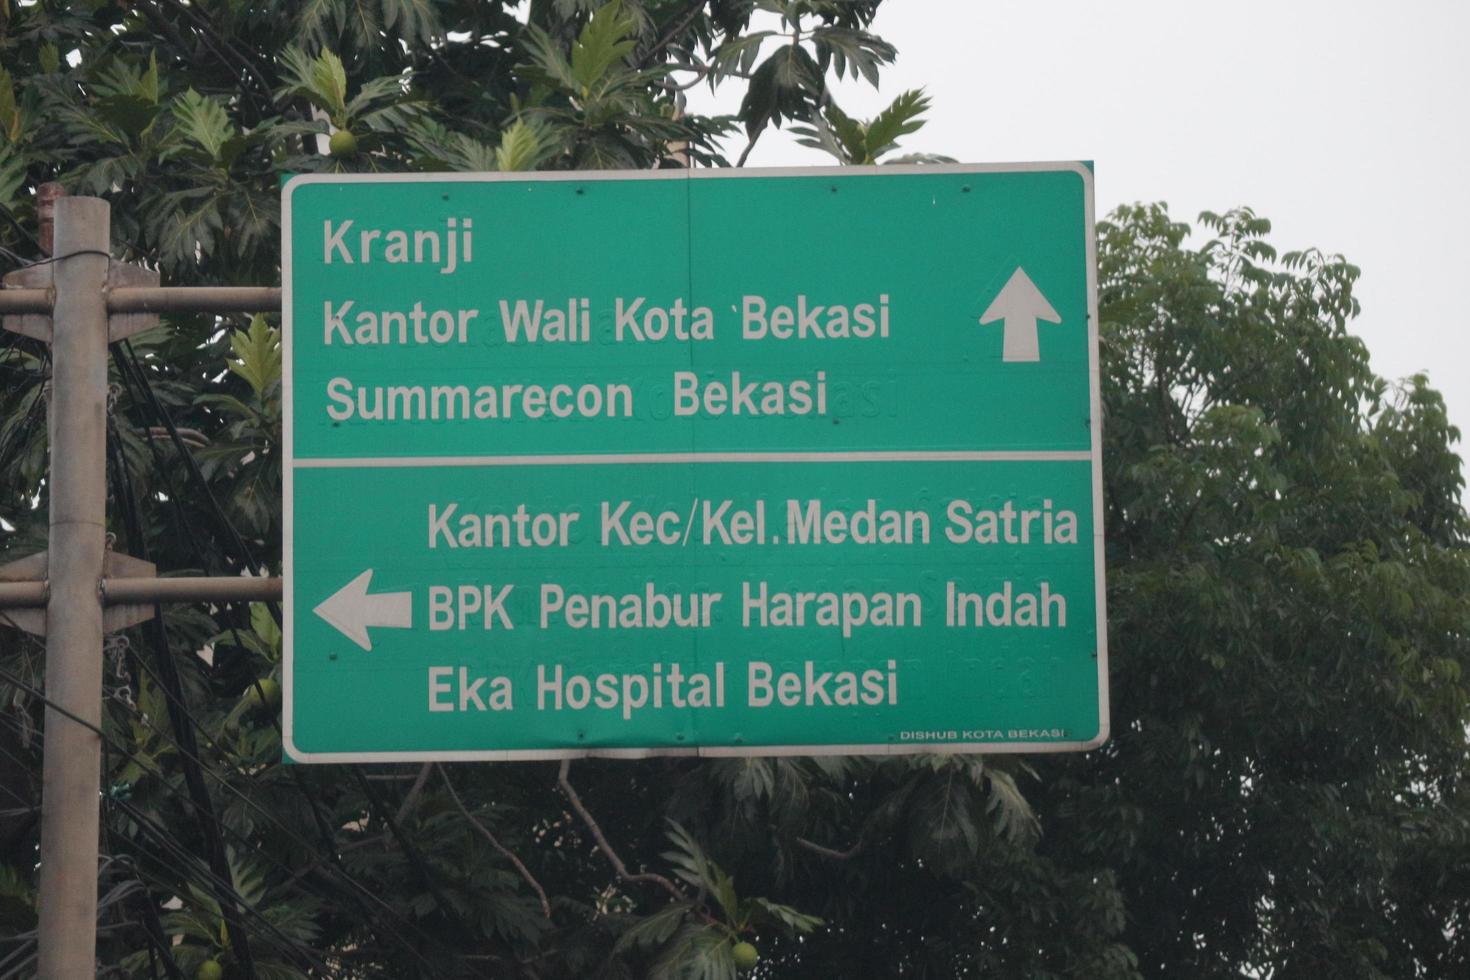 Bekasi, Indonesia on July 2022. Road signs to Kranji, Bekasi Mayor's Office, Summarecon Bekasi, Medan Satria photo